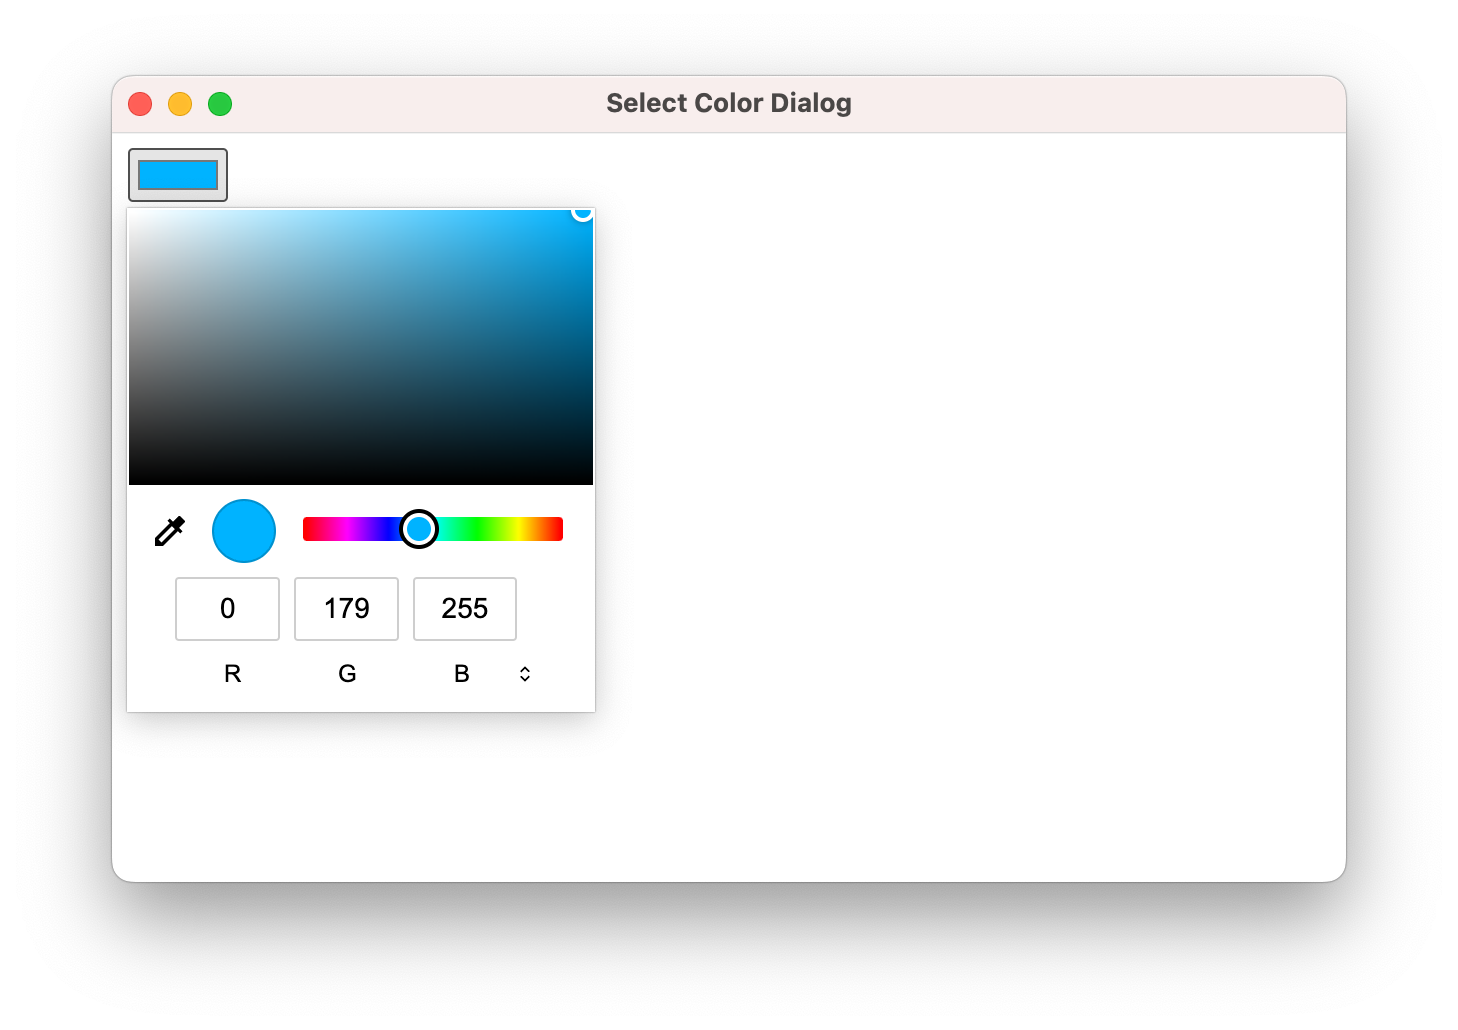 Select color dialog